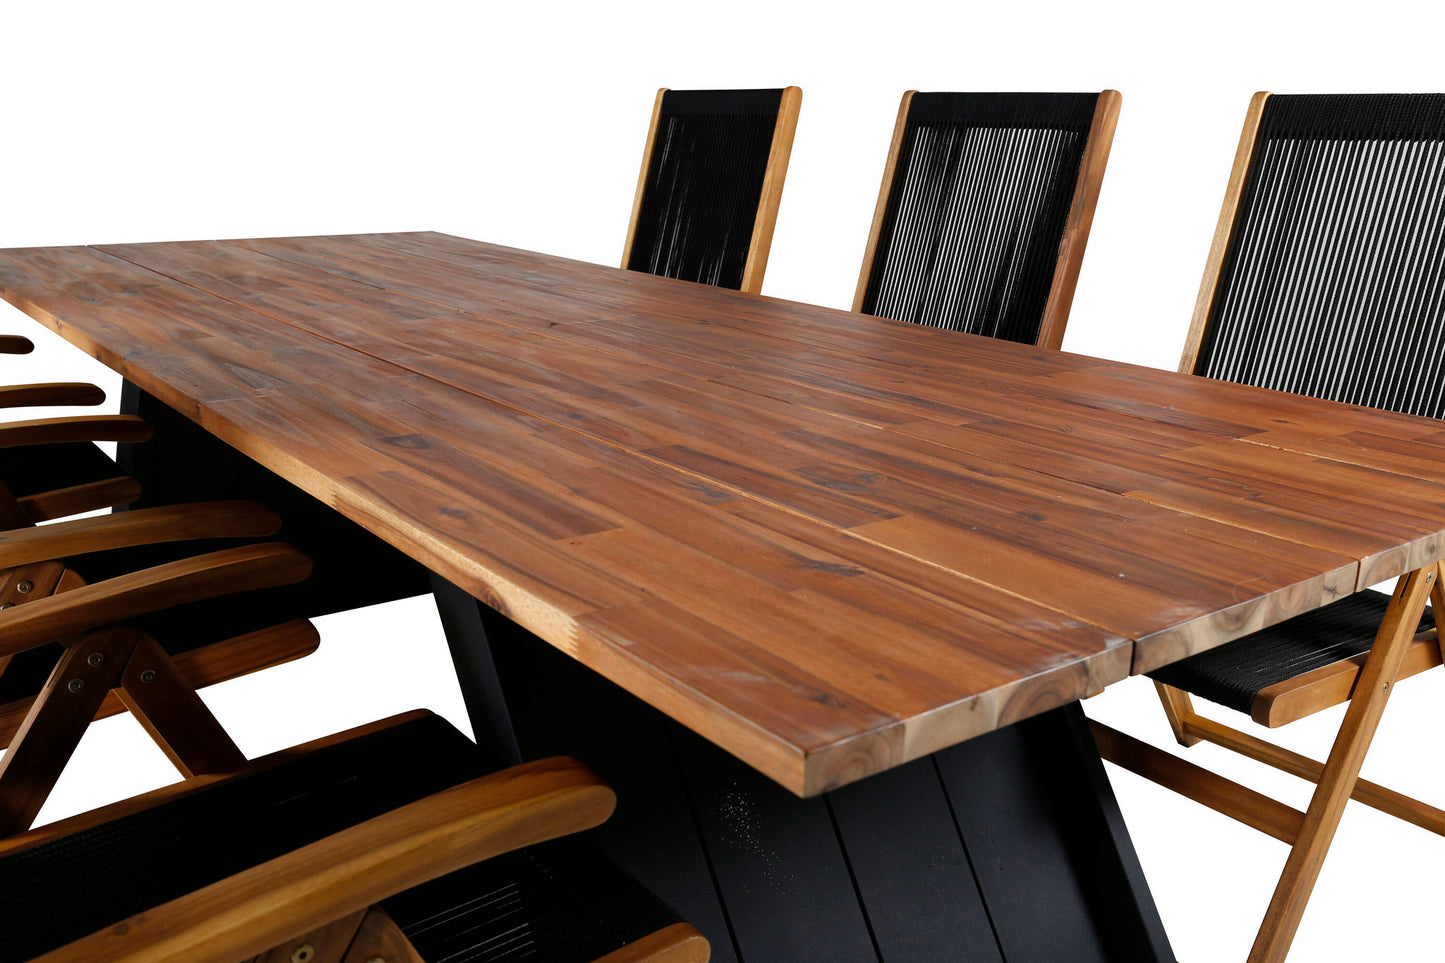 Doory - Spisebord, sort stål / akacie top i teak look - 250*100cm+Little John foldbar Stol - Reb / akacia